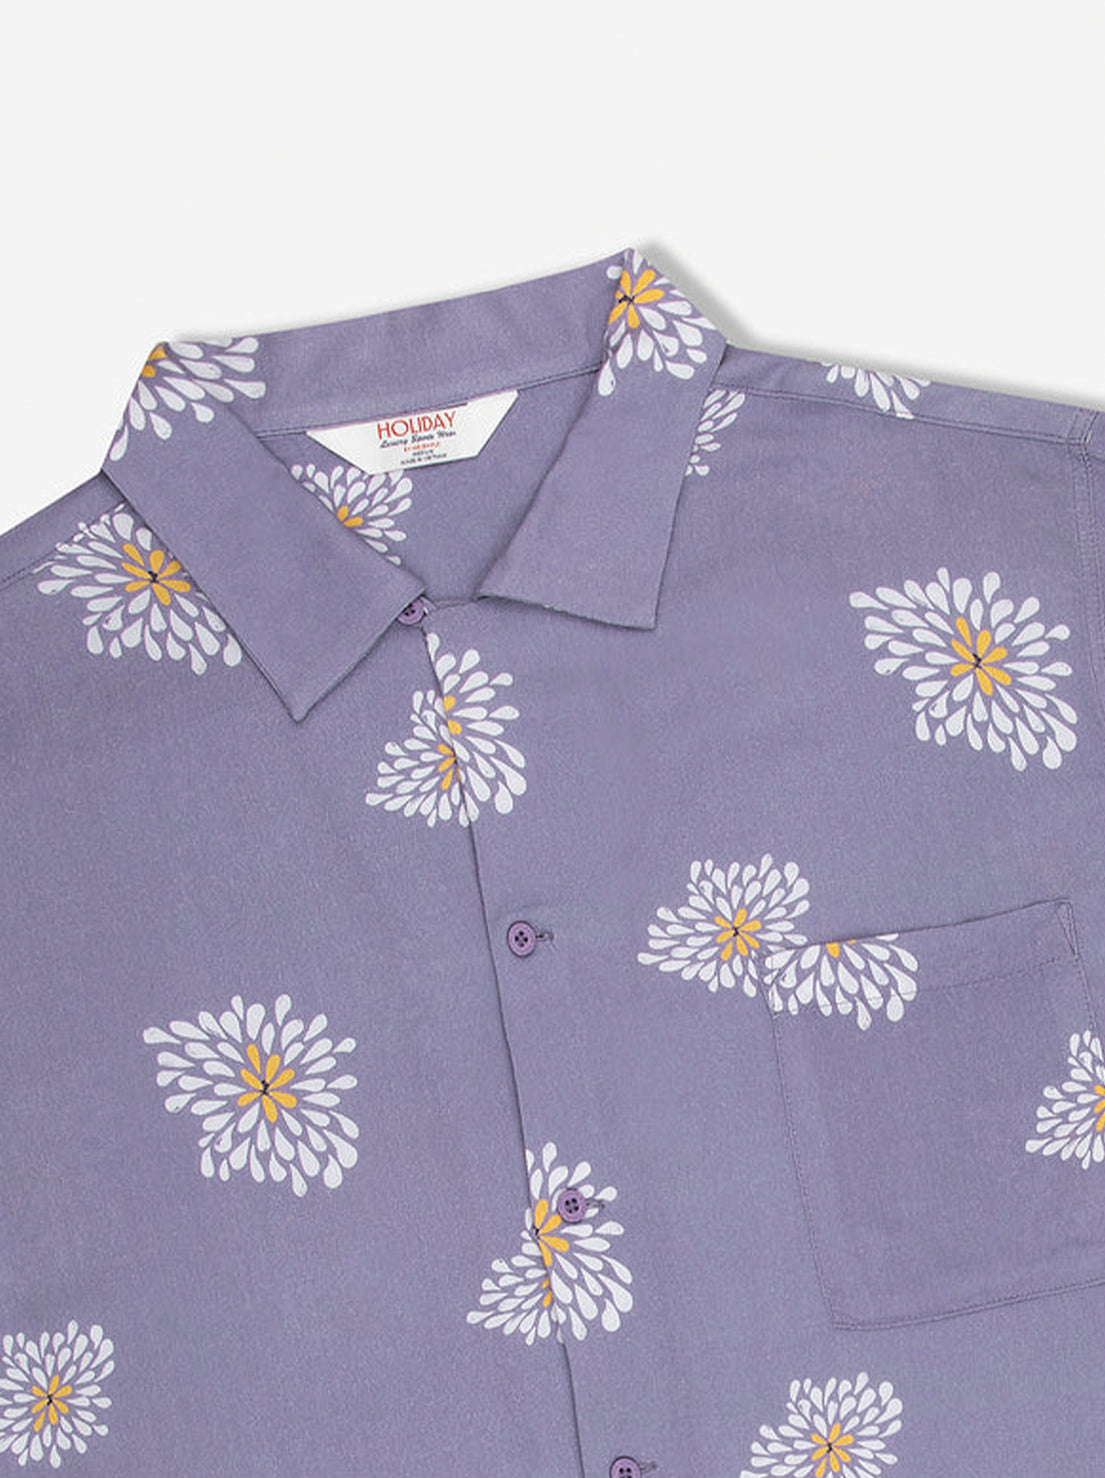 Mr Simple - Zed Bowler SS Shirt - Light Violet Oversized Flower